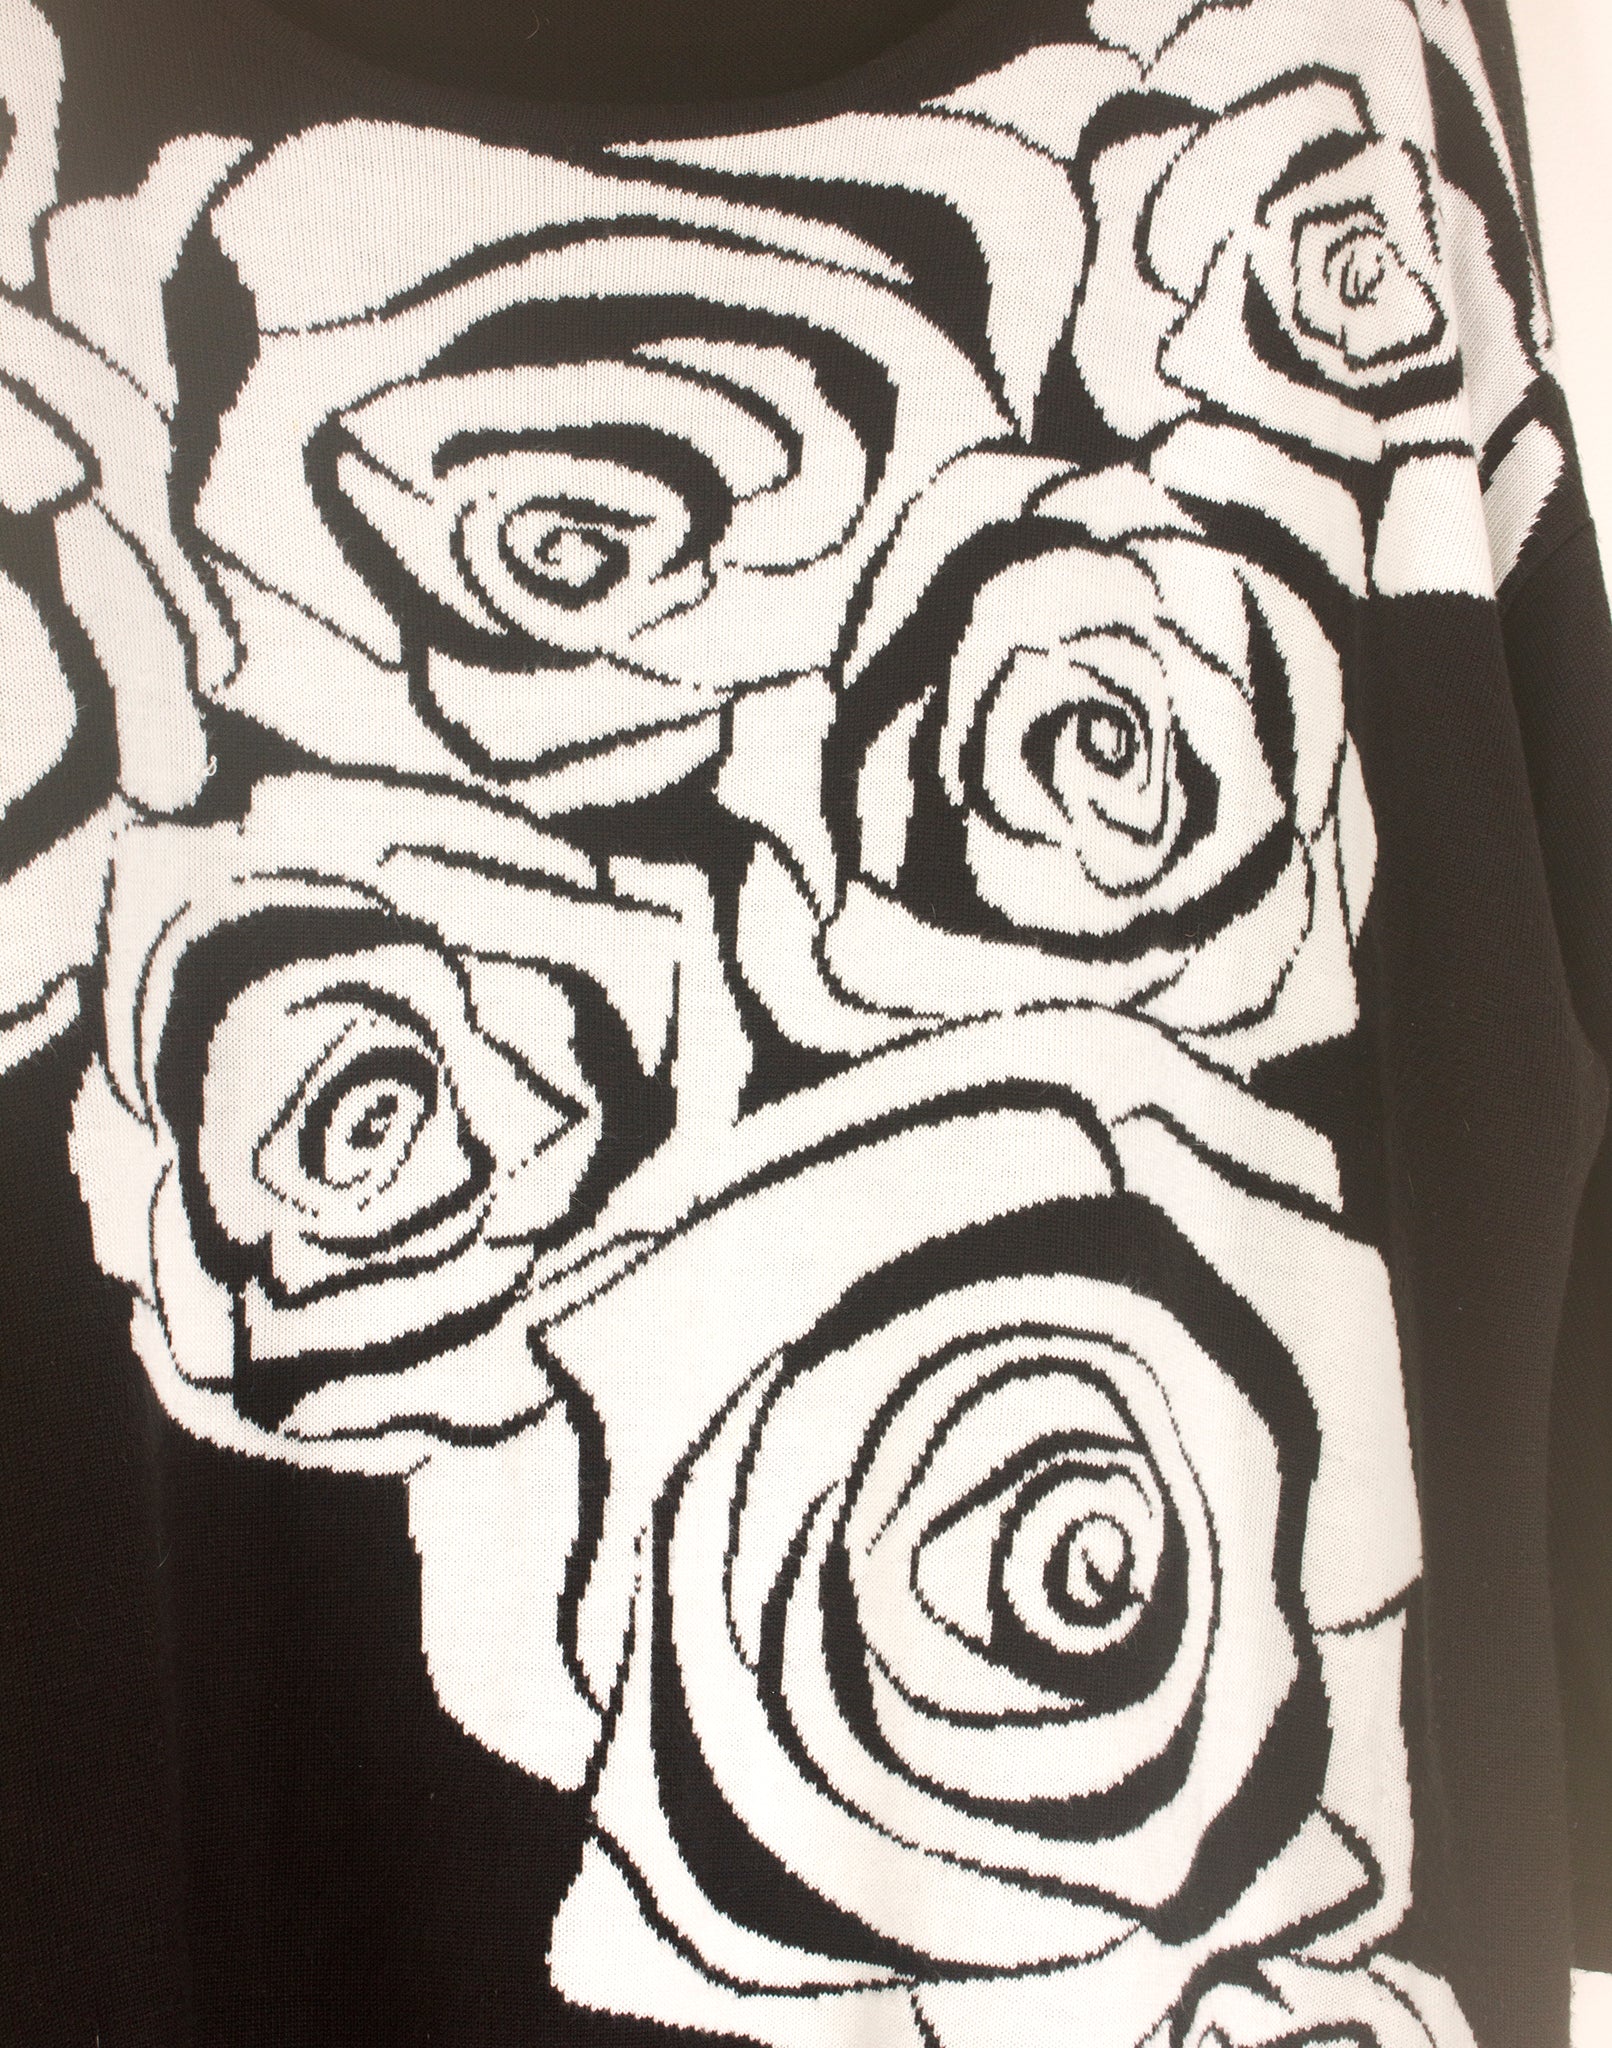 Autograph Black & White Rose Sweater Dress - Size XL